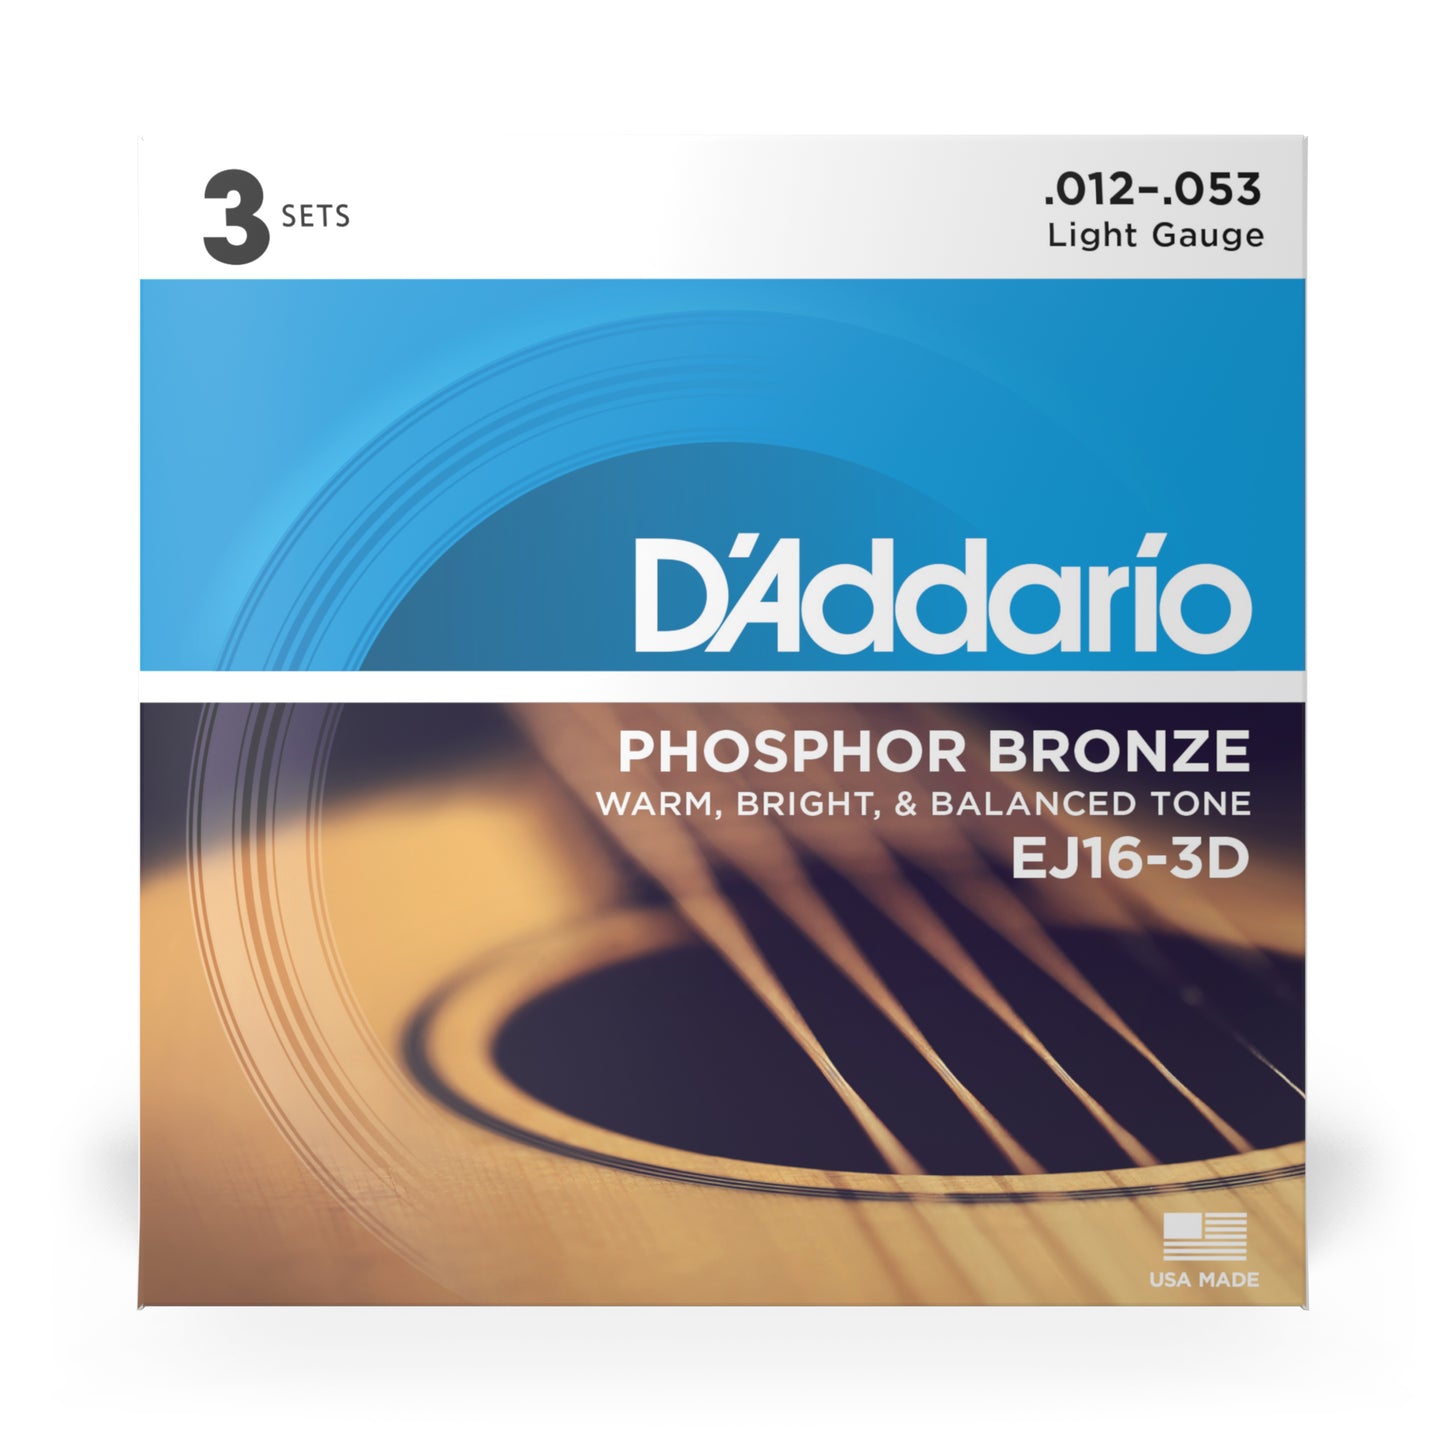 D'Addario EJ16-3D Light (12-53), Phosphor Bronze Acoustic Guitar Strings (3 SETS)